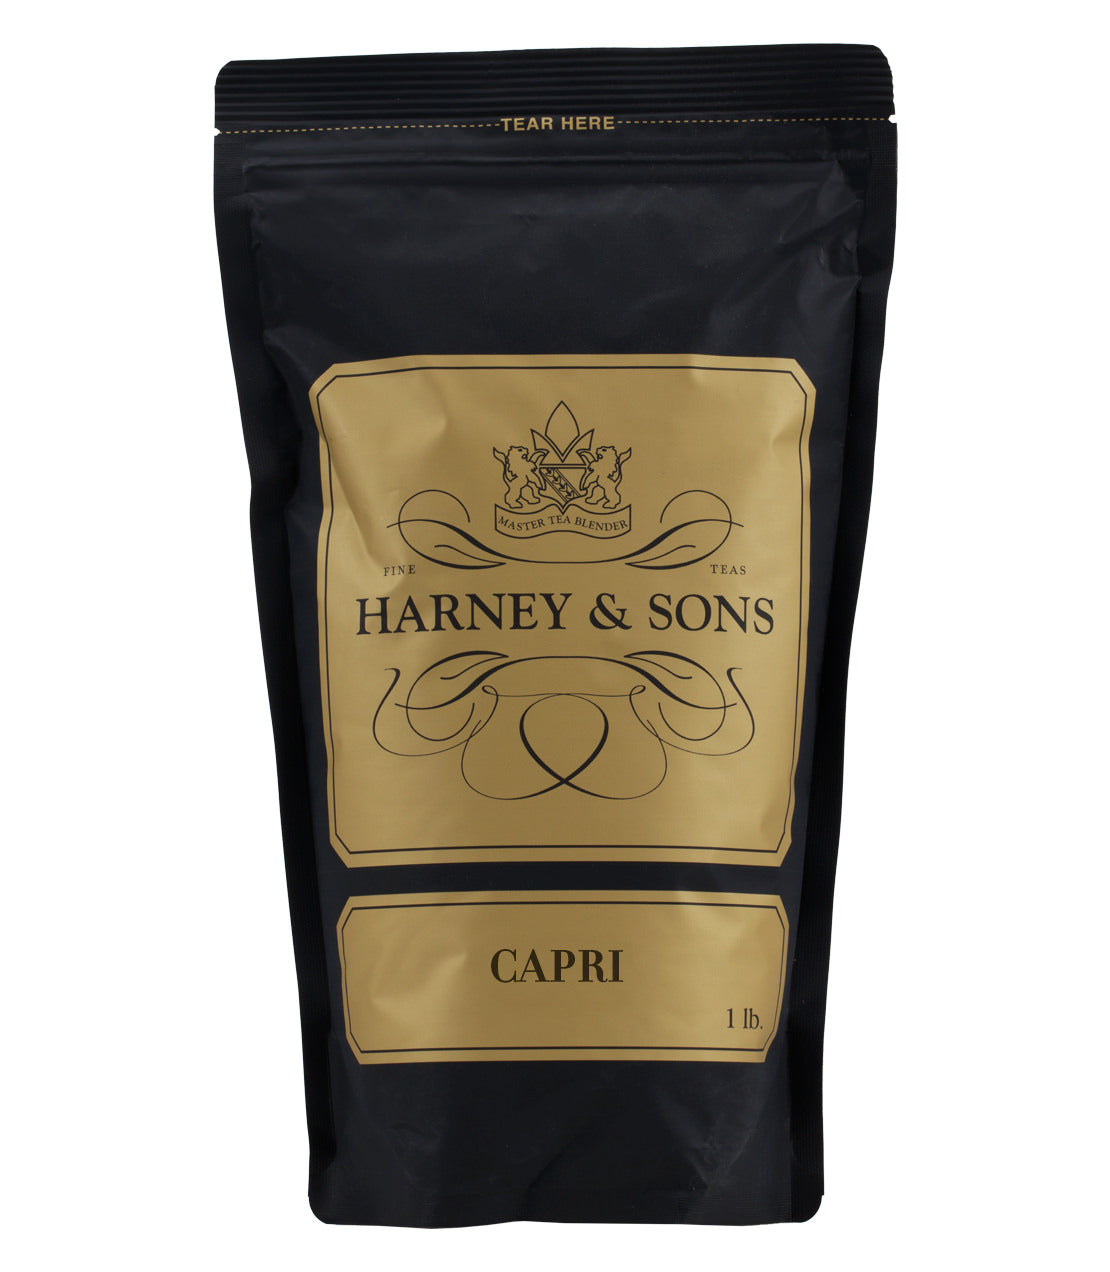 Capri - Loose 1 lb. Bag - Harney & Sons Fine Teas